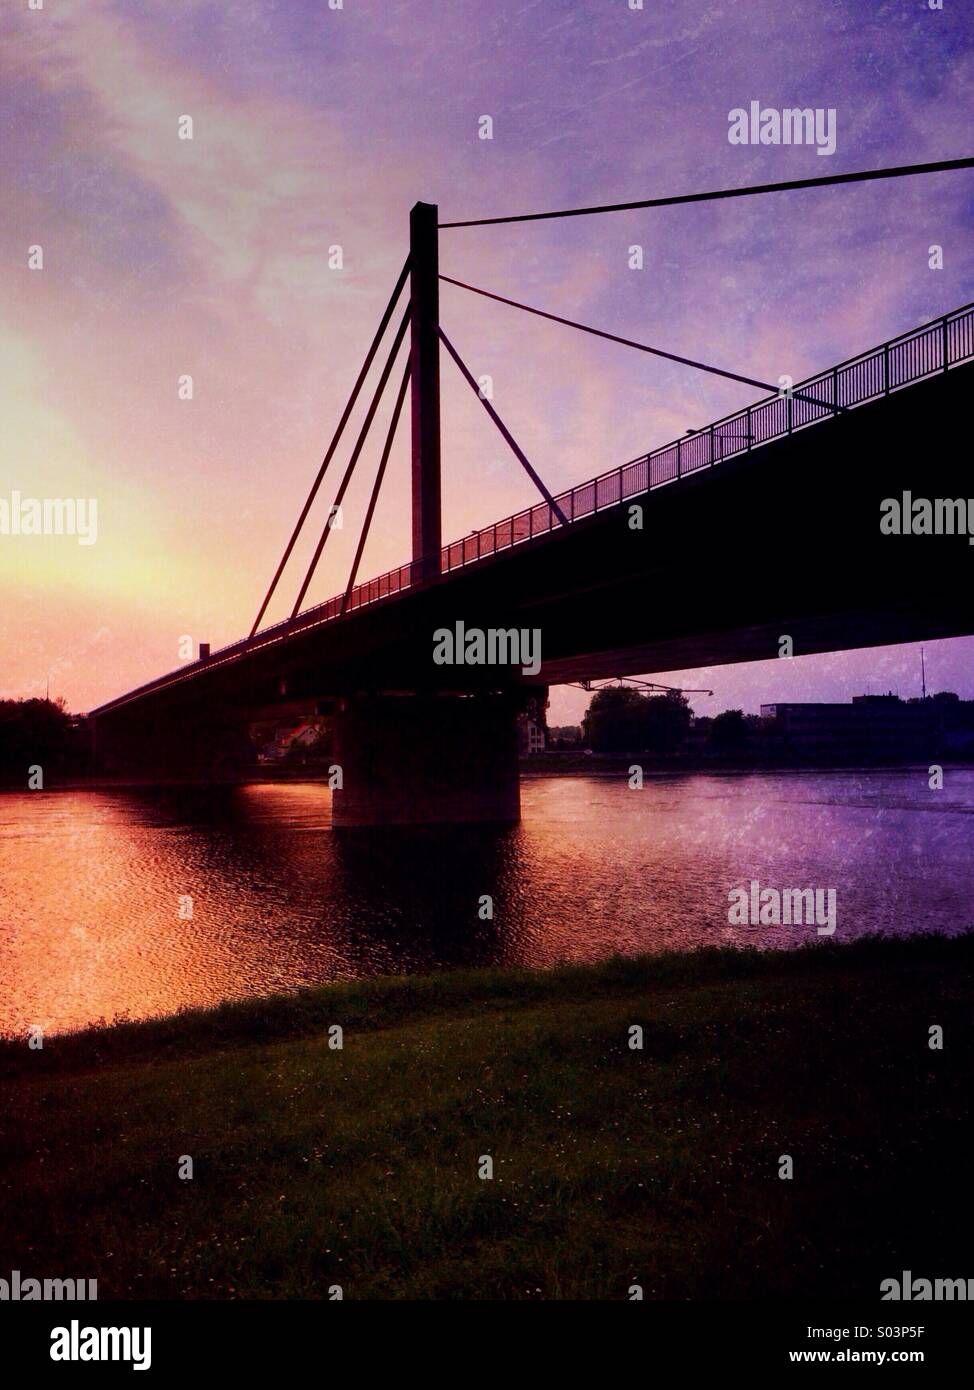 Road Bridge over the River Rhine at Sunset Stock Photo